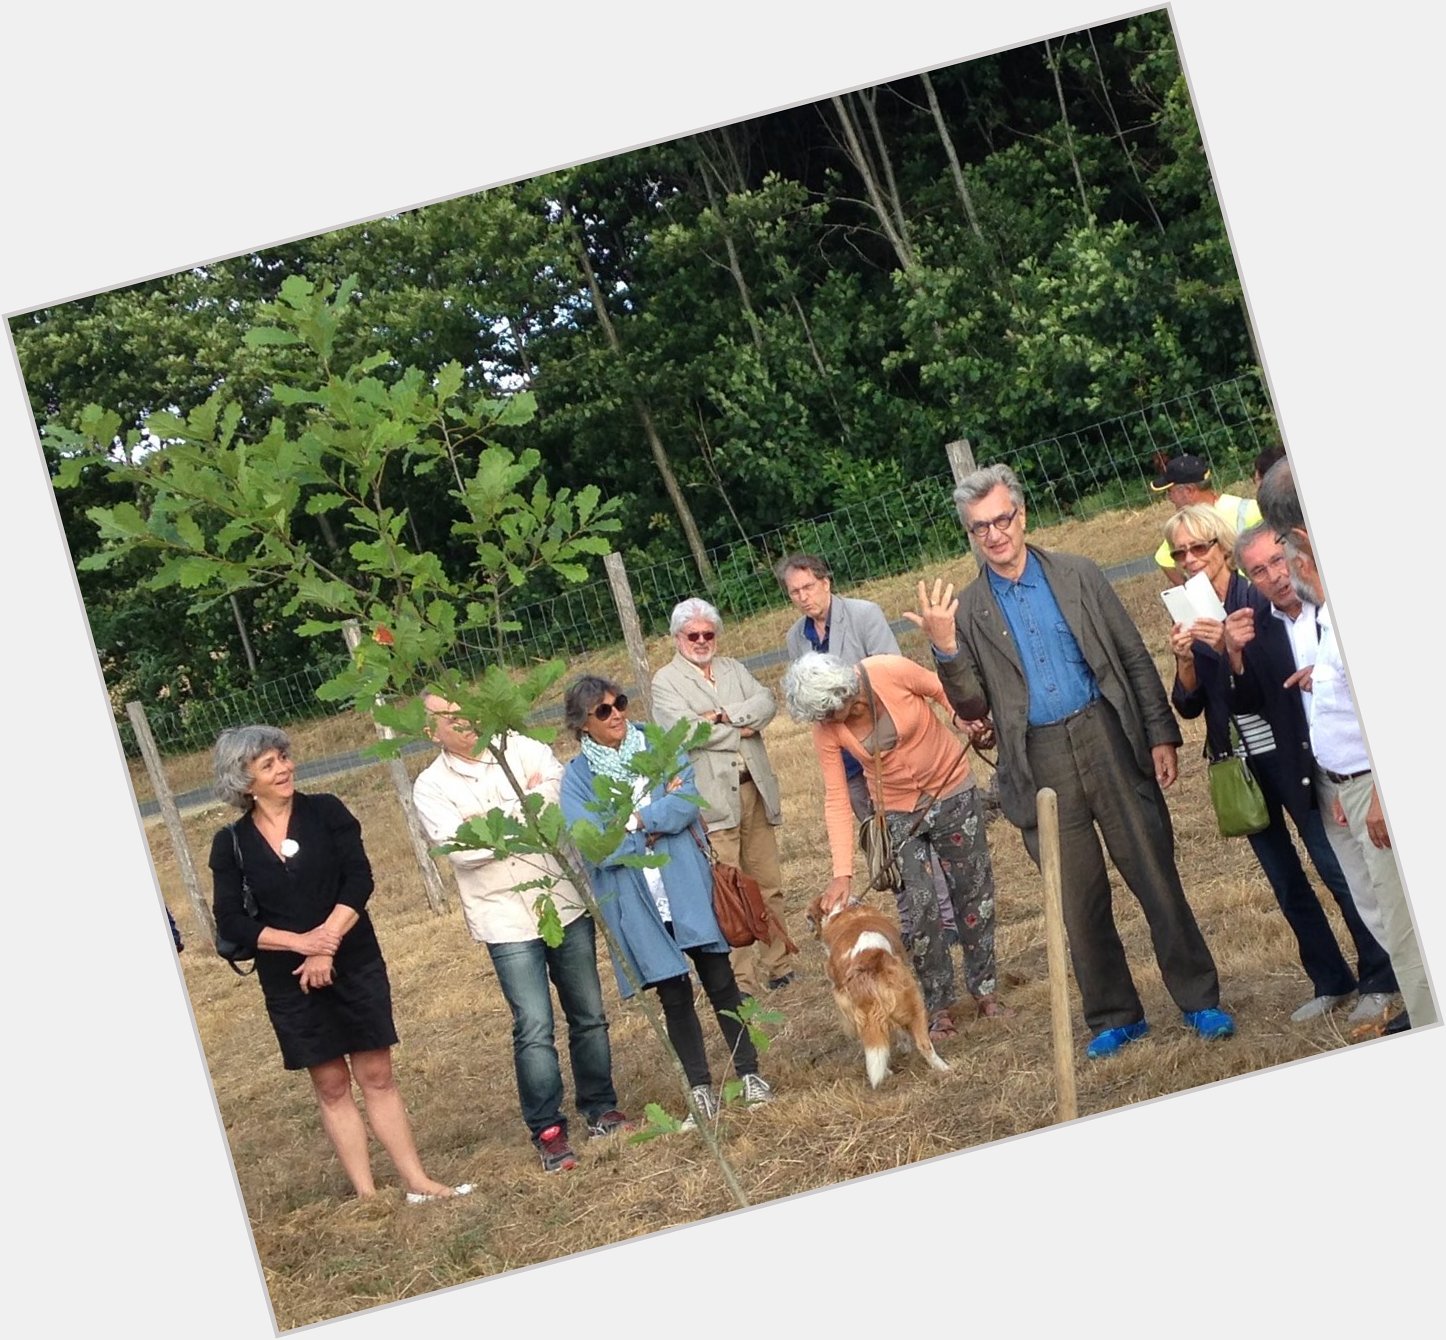 Arboretum, Saint-Yrieix-la-Perche, France, July 2015 Belated Happy Birthday Wim Wenders 14 August 